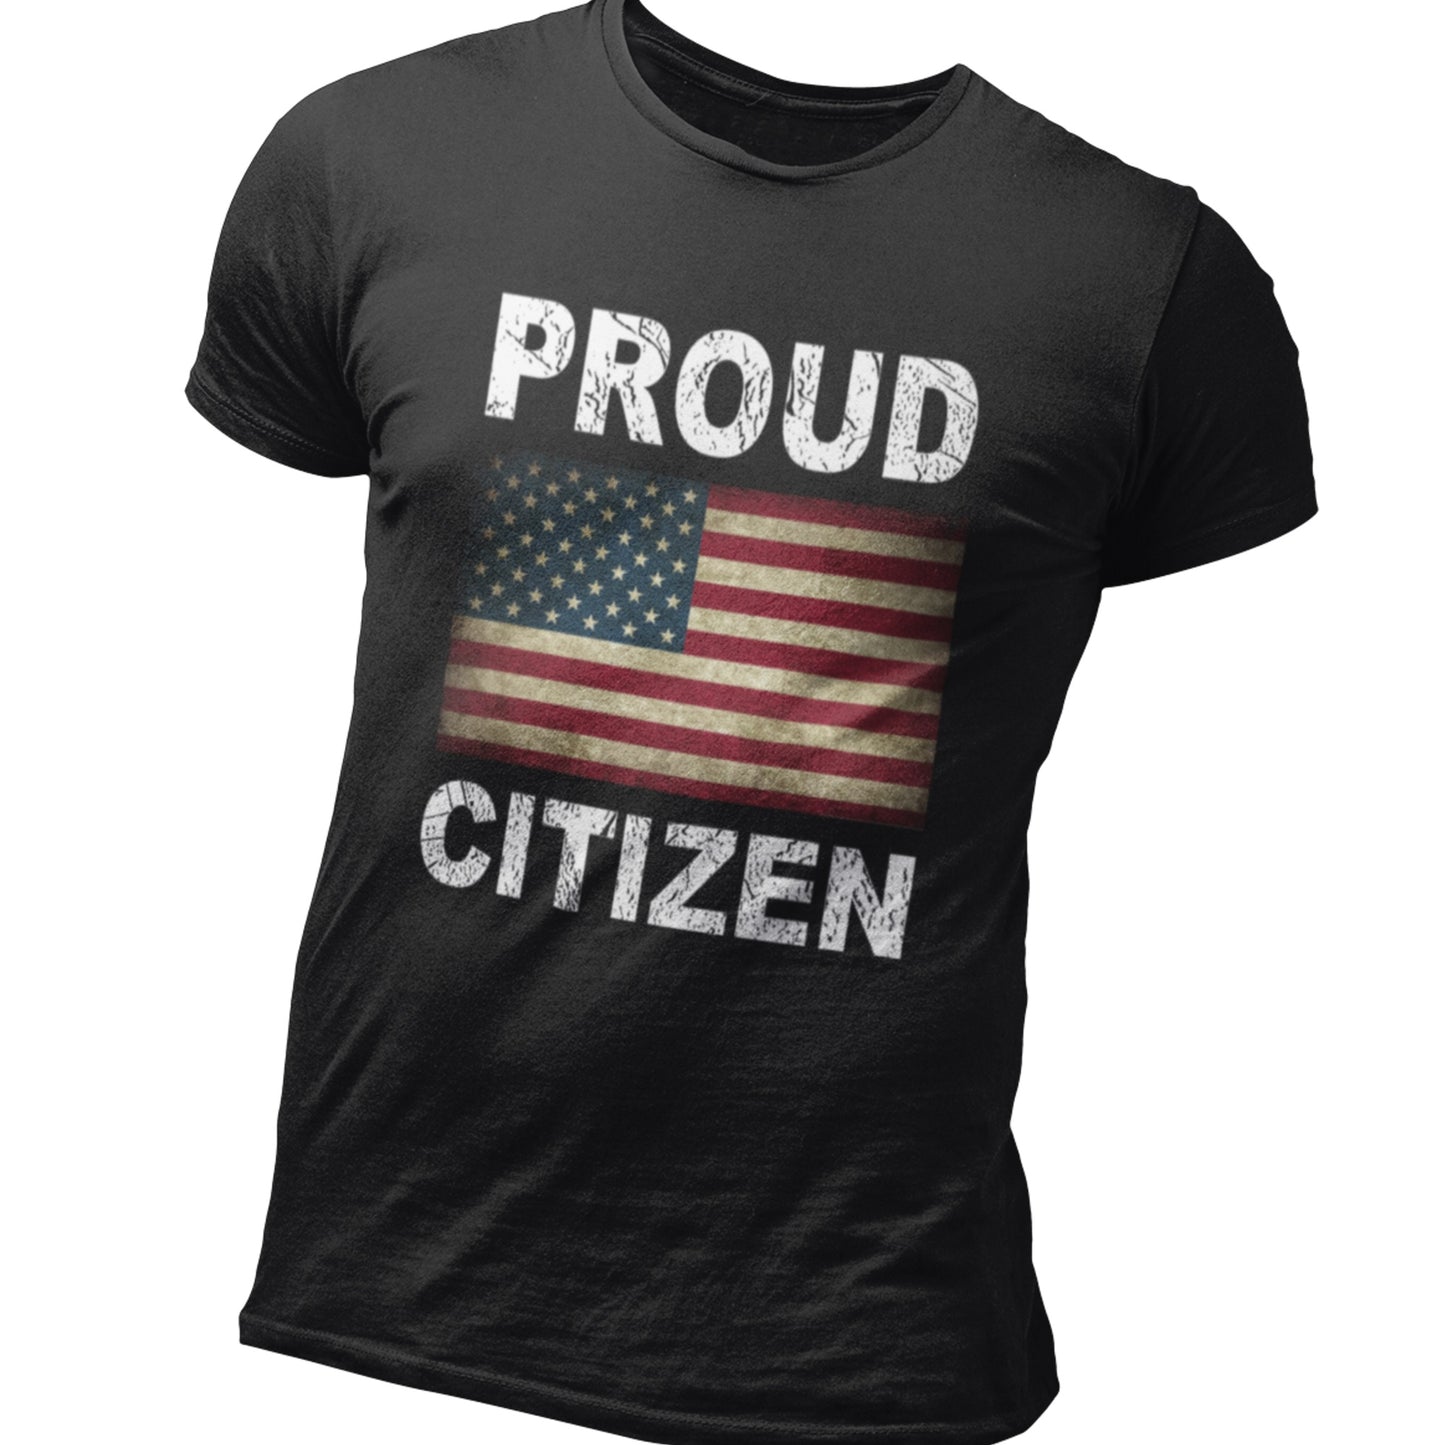 Proud Citizen Unisex Shirt, American, Irish, Canadian, Ukrainian, Multi Countries Tee